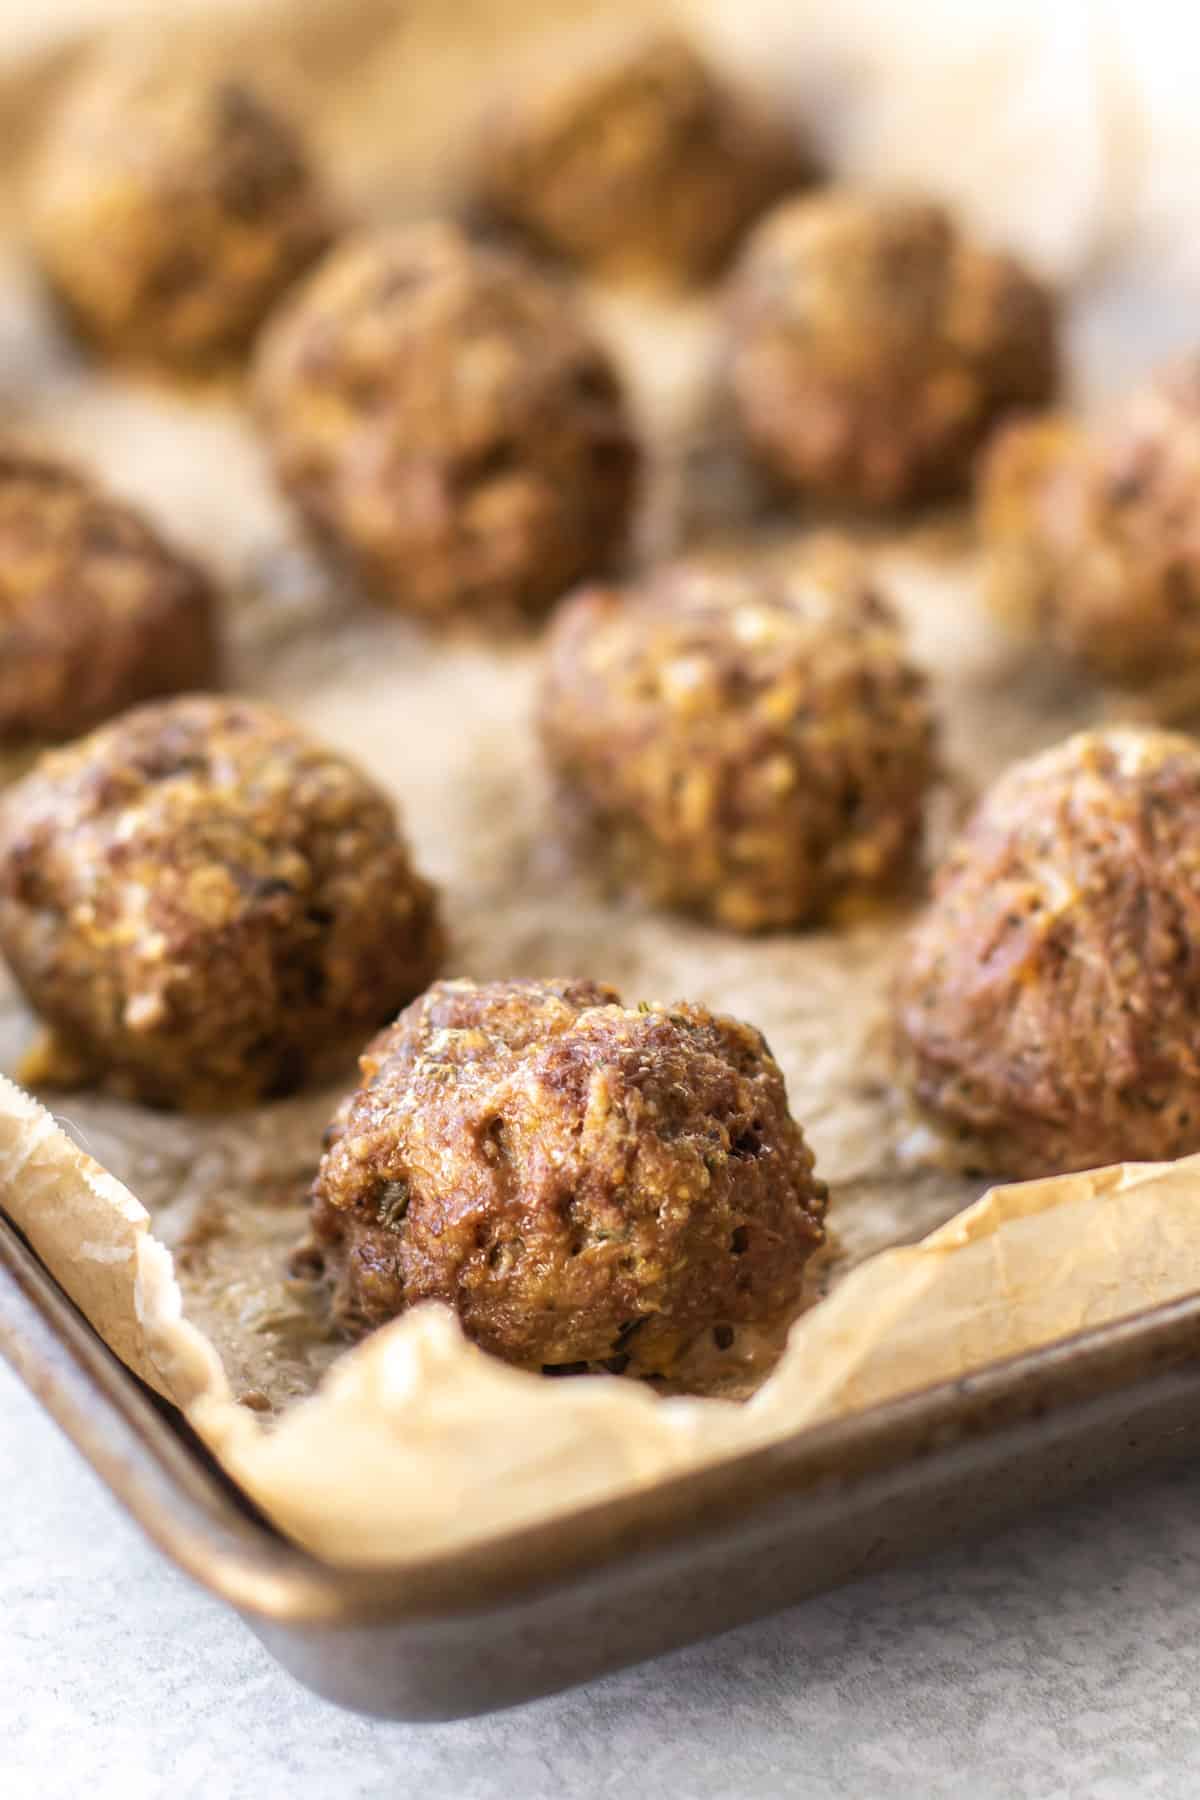 baked meatballs on a sheet pan.